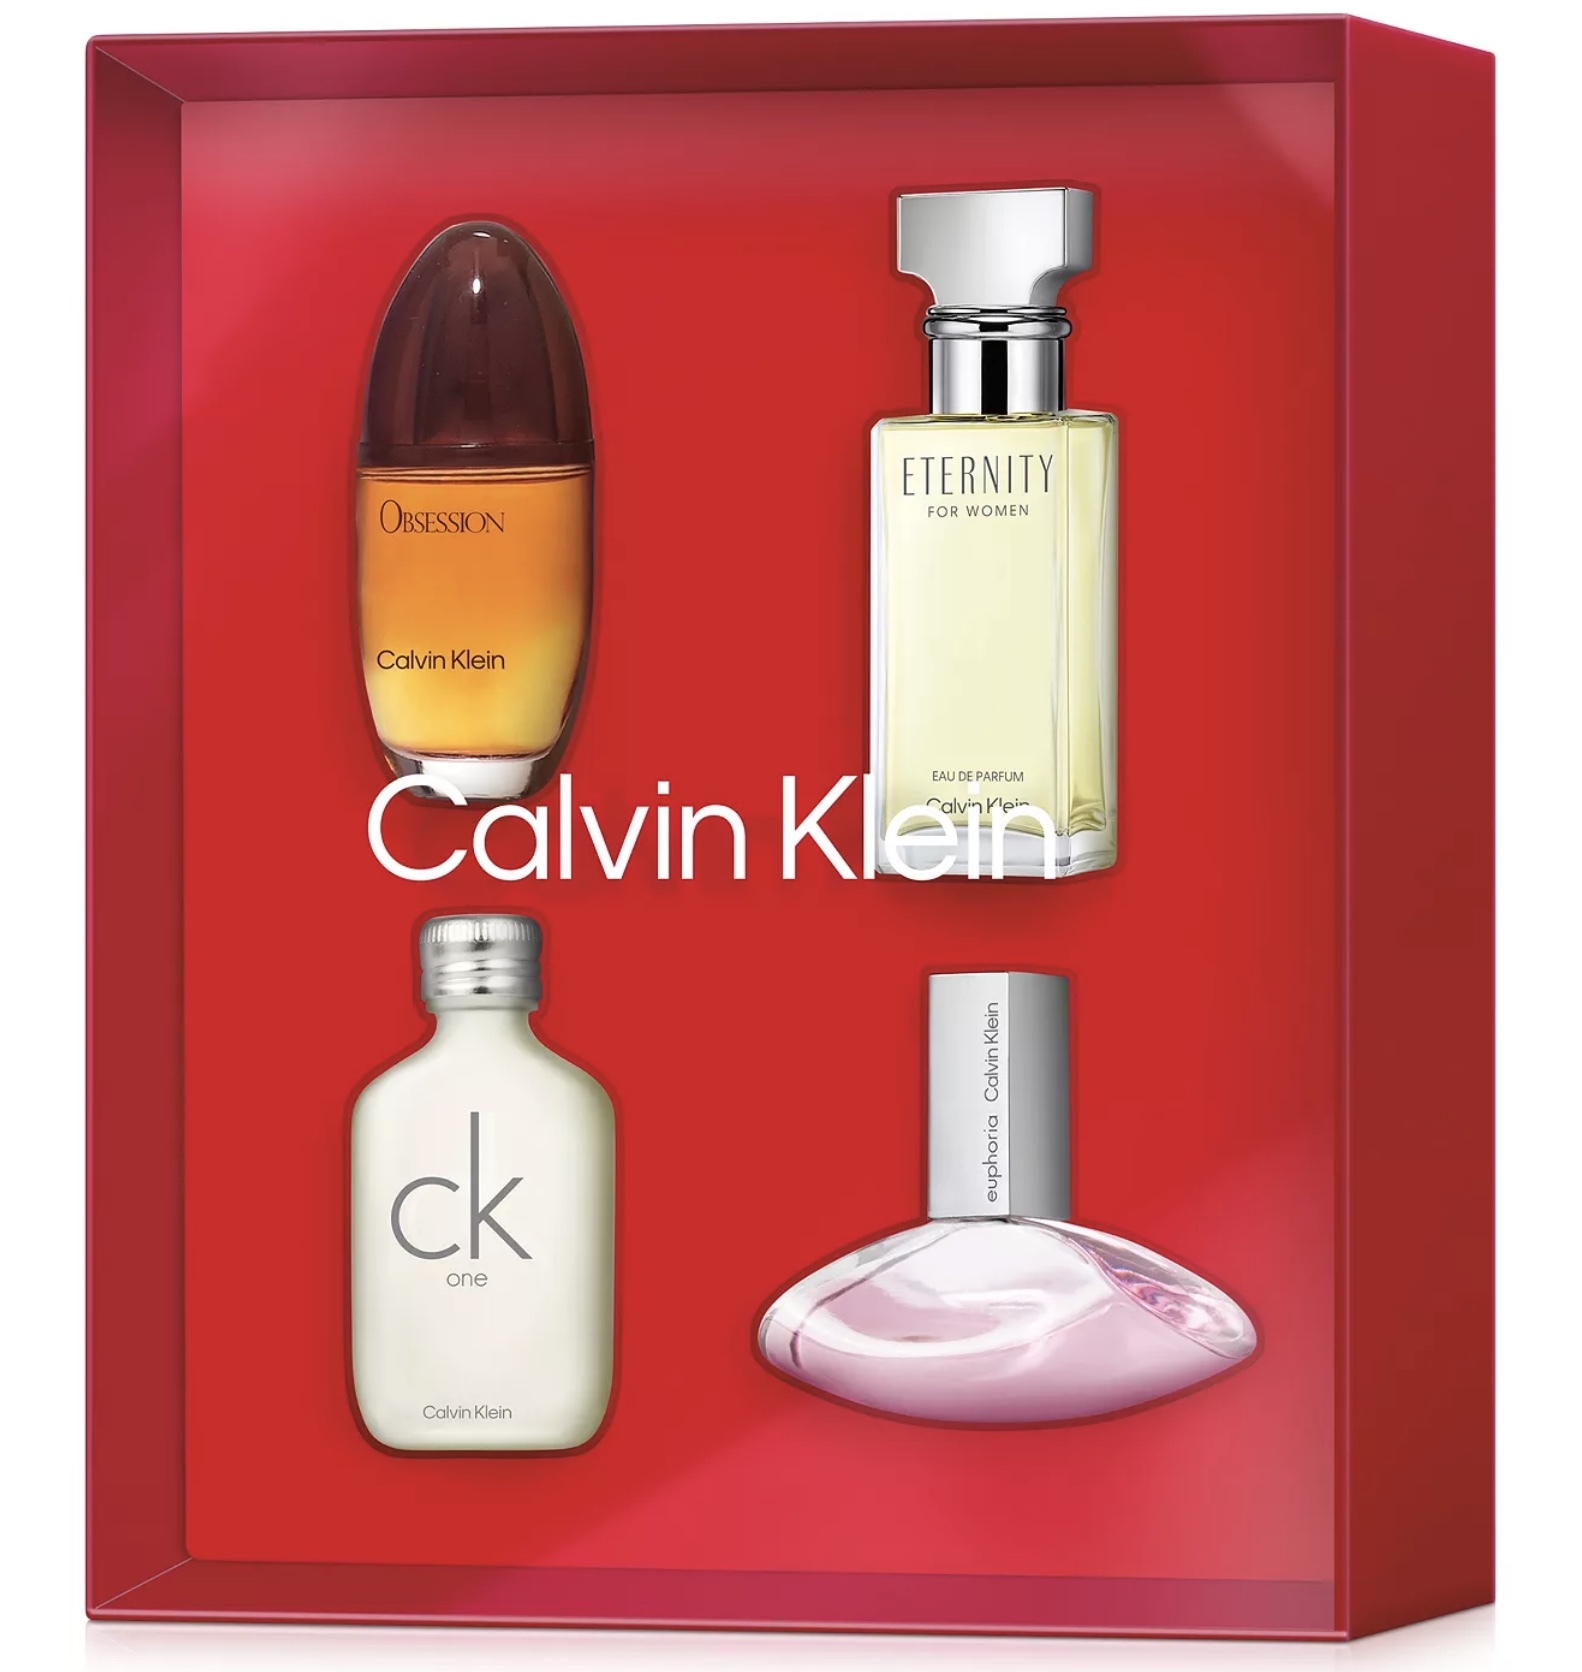 CALVIN KLEIN Women's Perfume Gift Set $104 VALUE